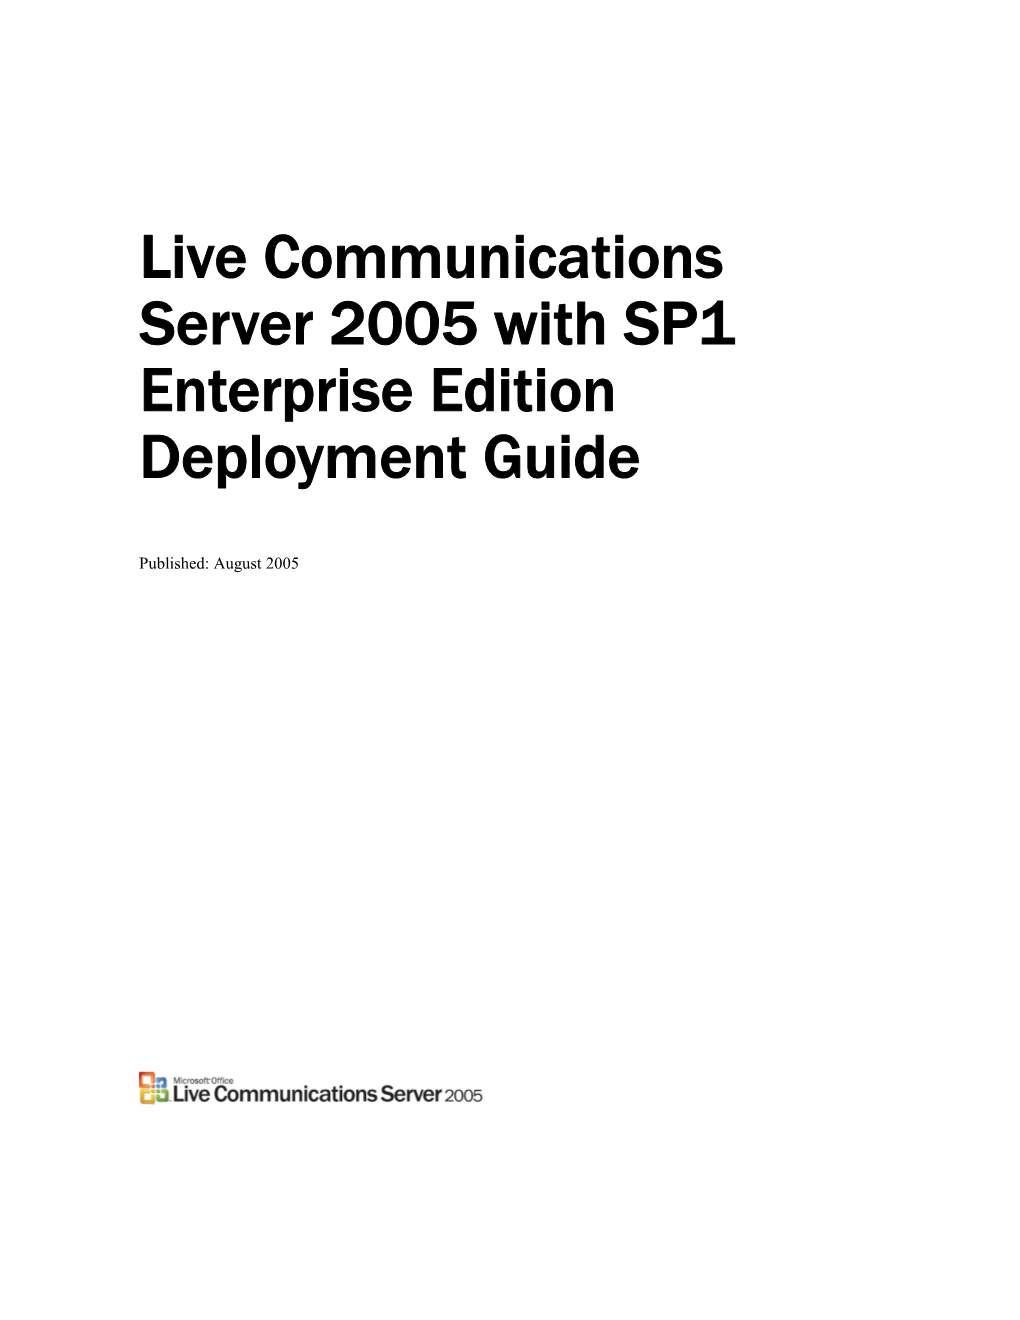 Live Communications Server 2005 Enterprise Edition Deployment Guide